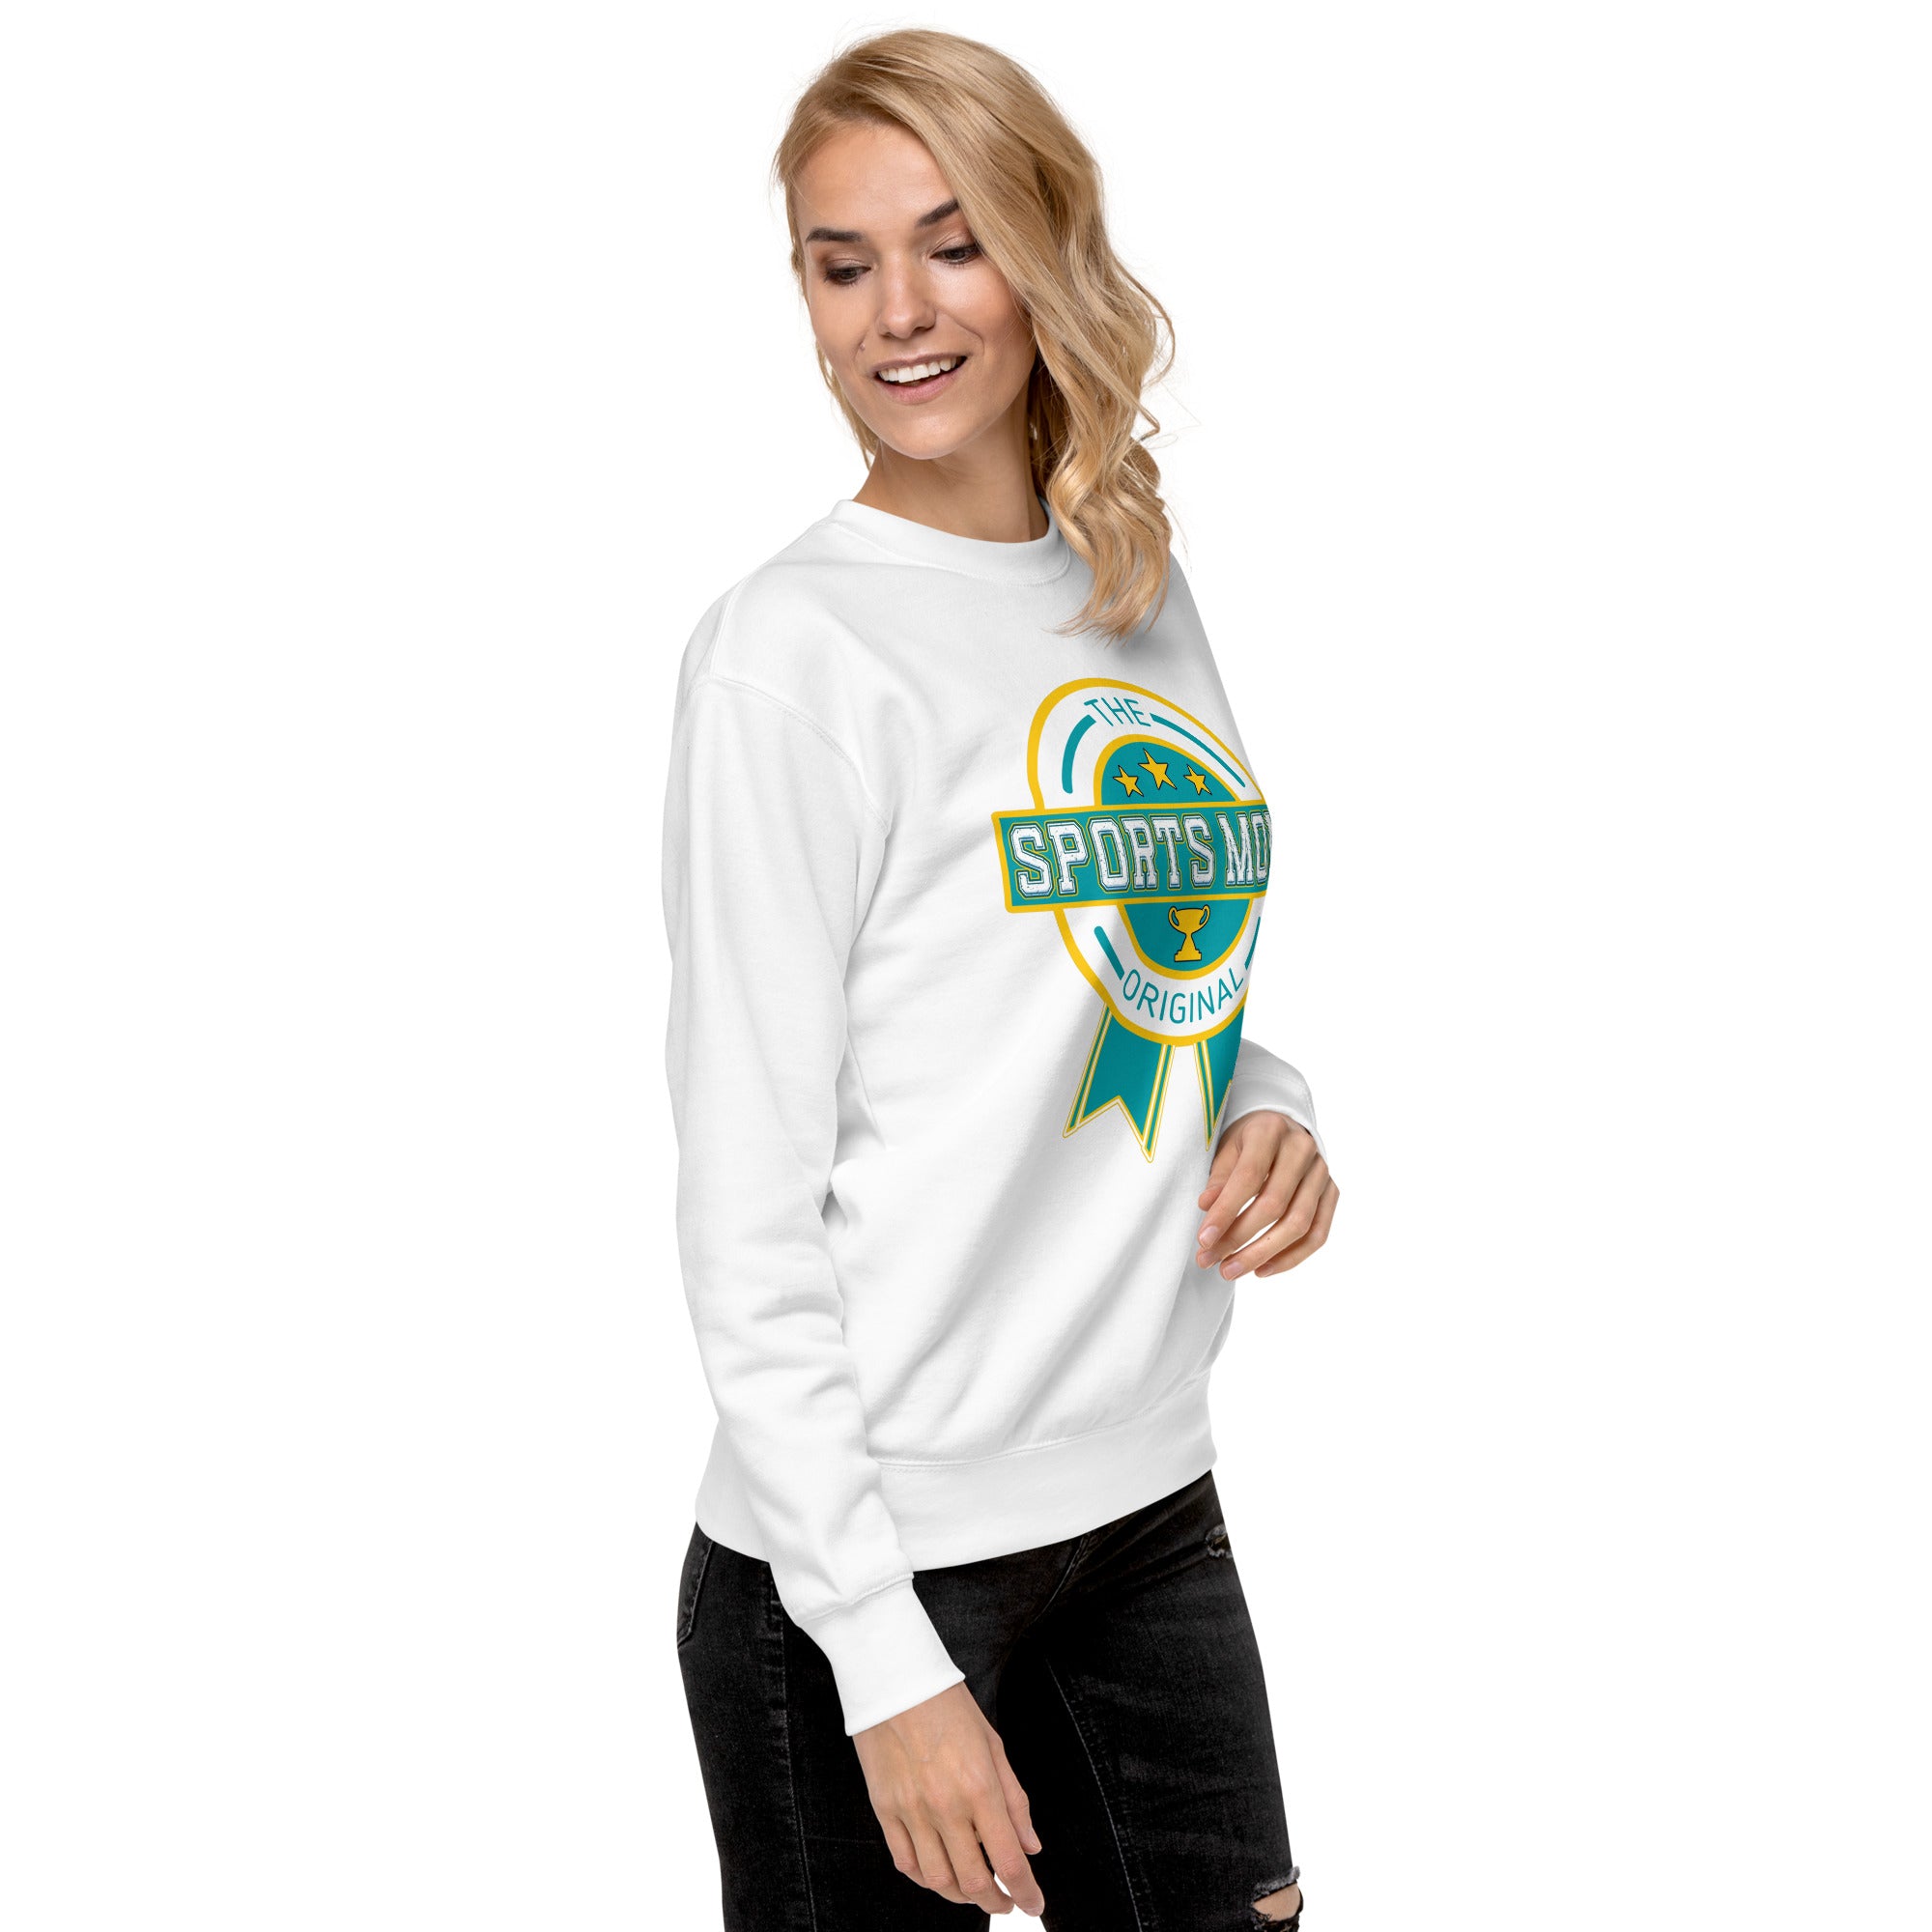 The Original Sports Mom Comfort Crew Sweatshirt